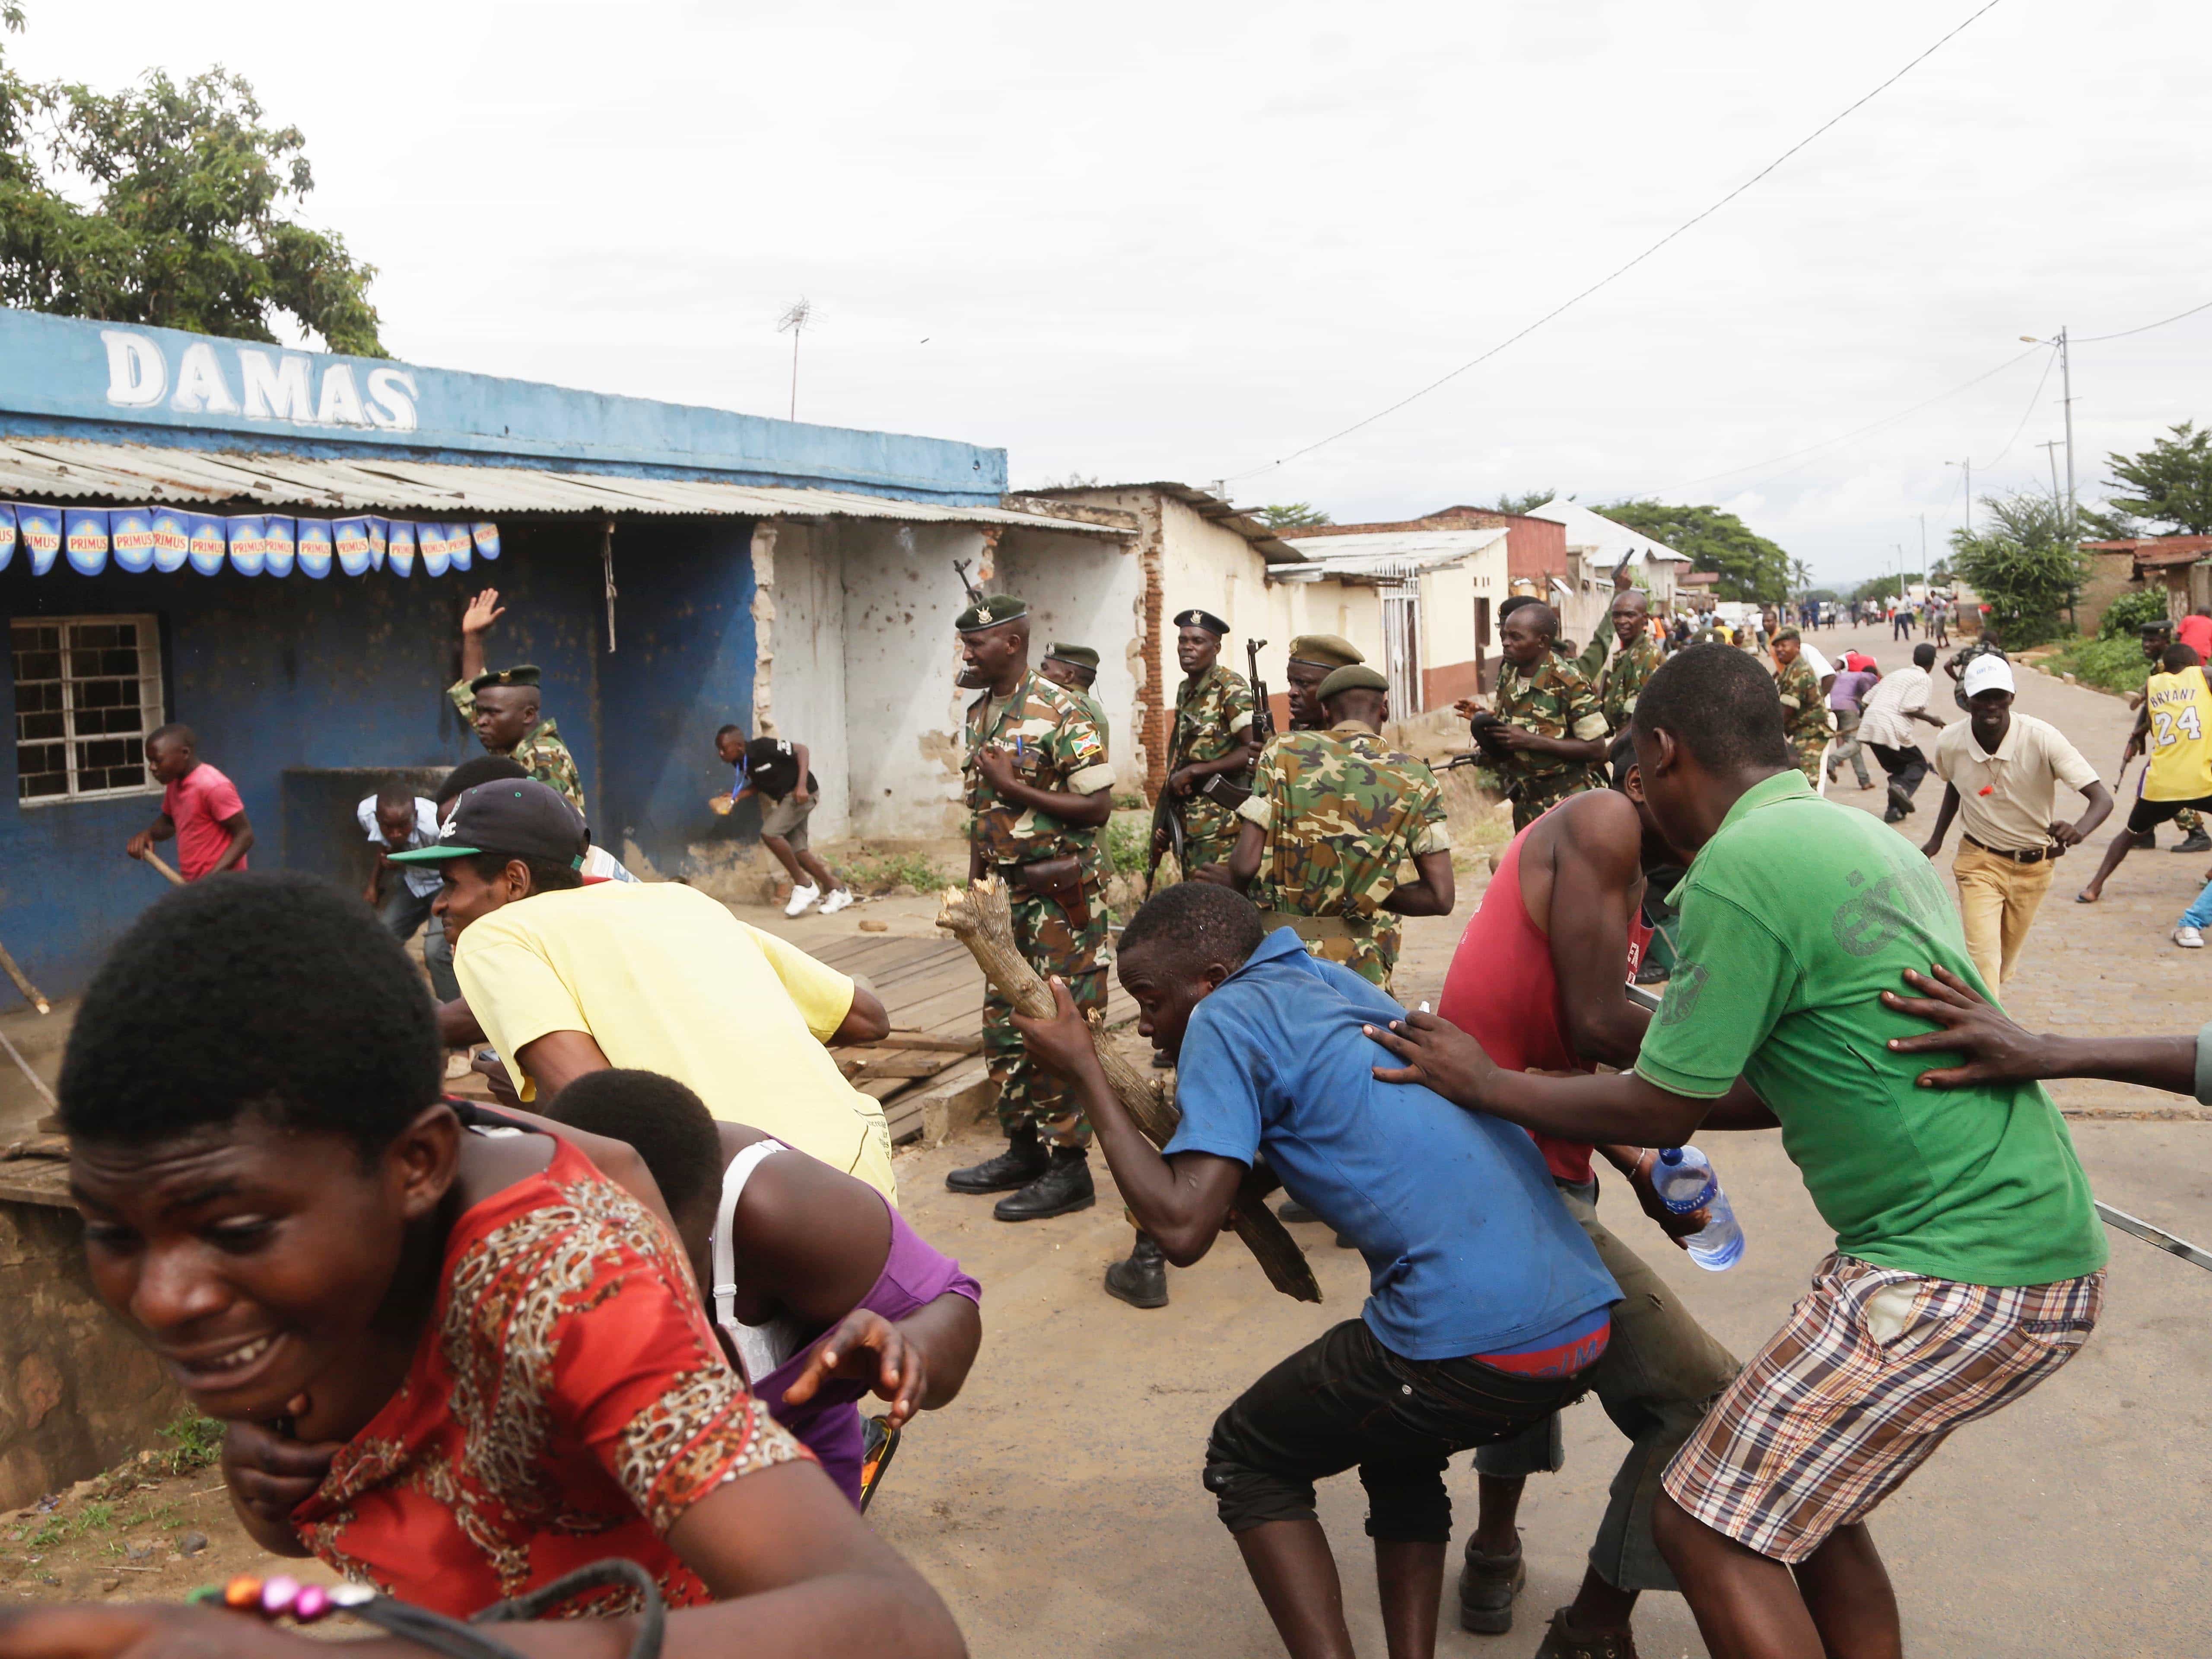 Demonstrators run from soldiers firing into the air to disperse a crowd of demonstrators who had cornered Jean Claude Niyonzima, a suspected member of the Imbonerakure in Bujumbura, Burundi, 7 May 2015, AP Photo/Jerome Delay